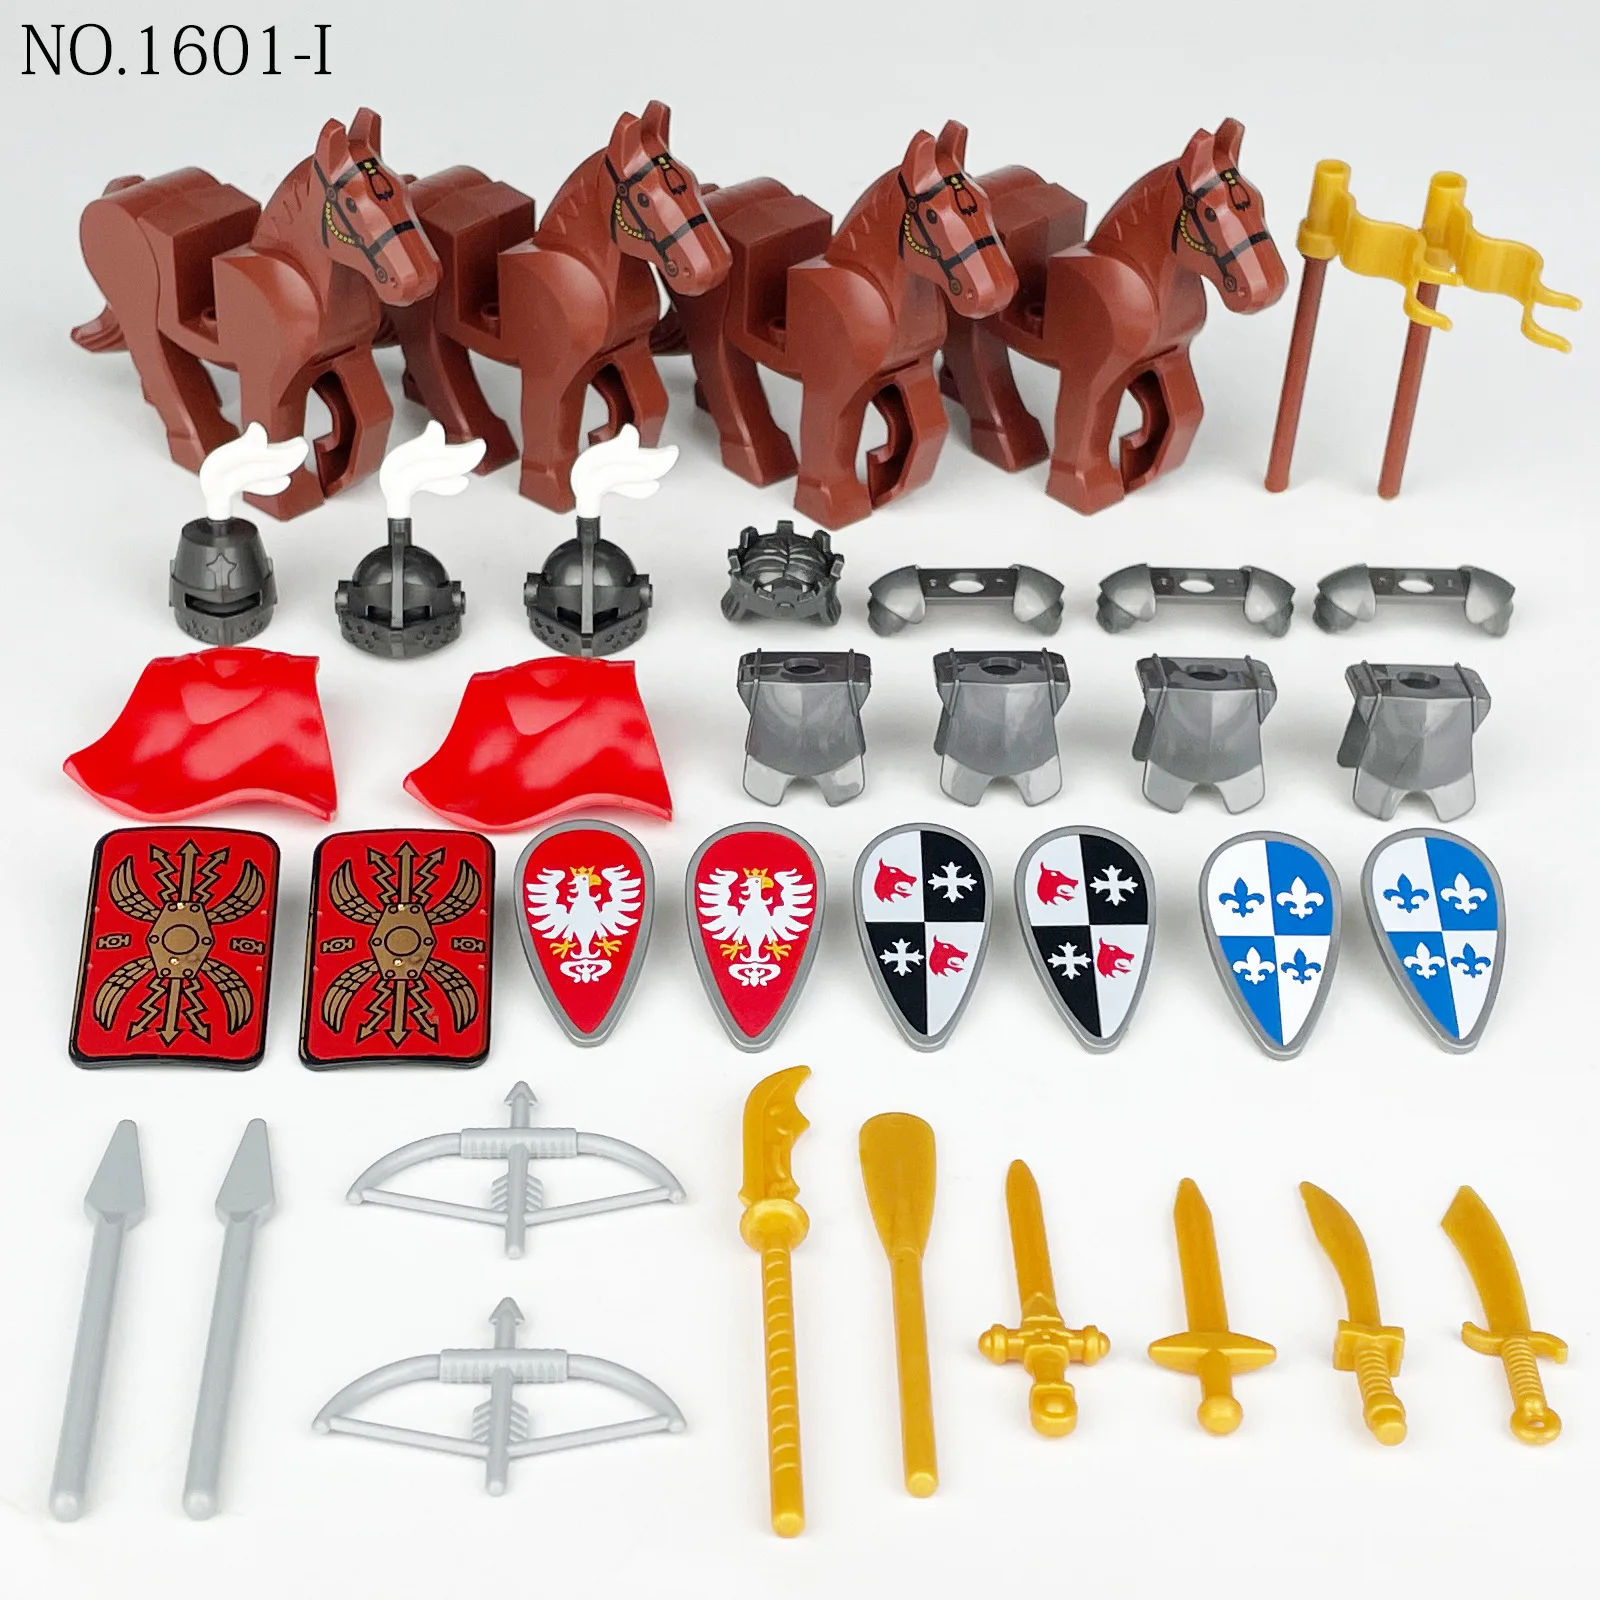 

Small Granule Medieval Knight Weapon Equipment Figures Educational Building Blocks Accessories DIY Model Bricks Kids Toys Gifts